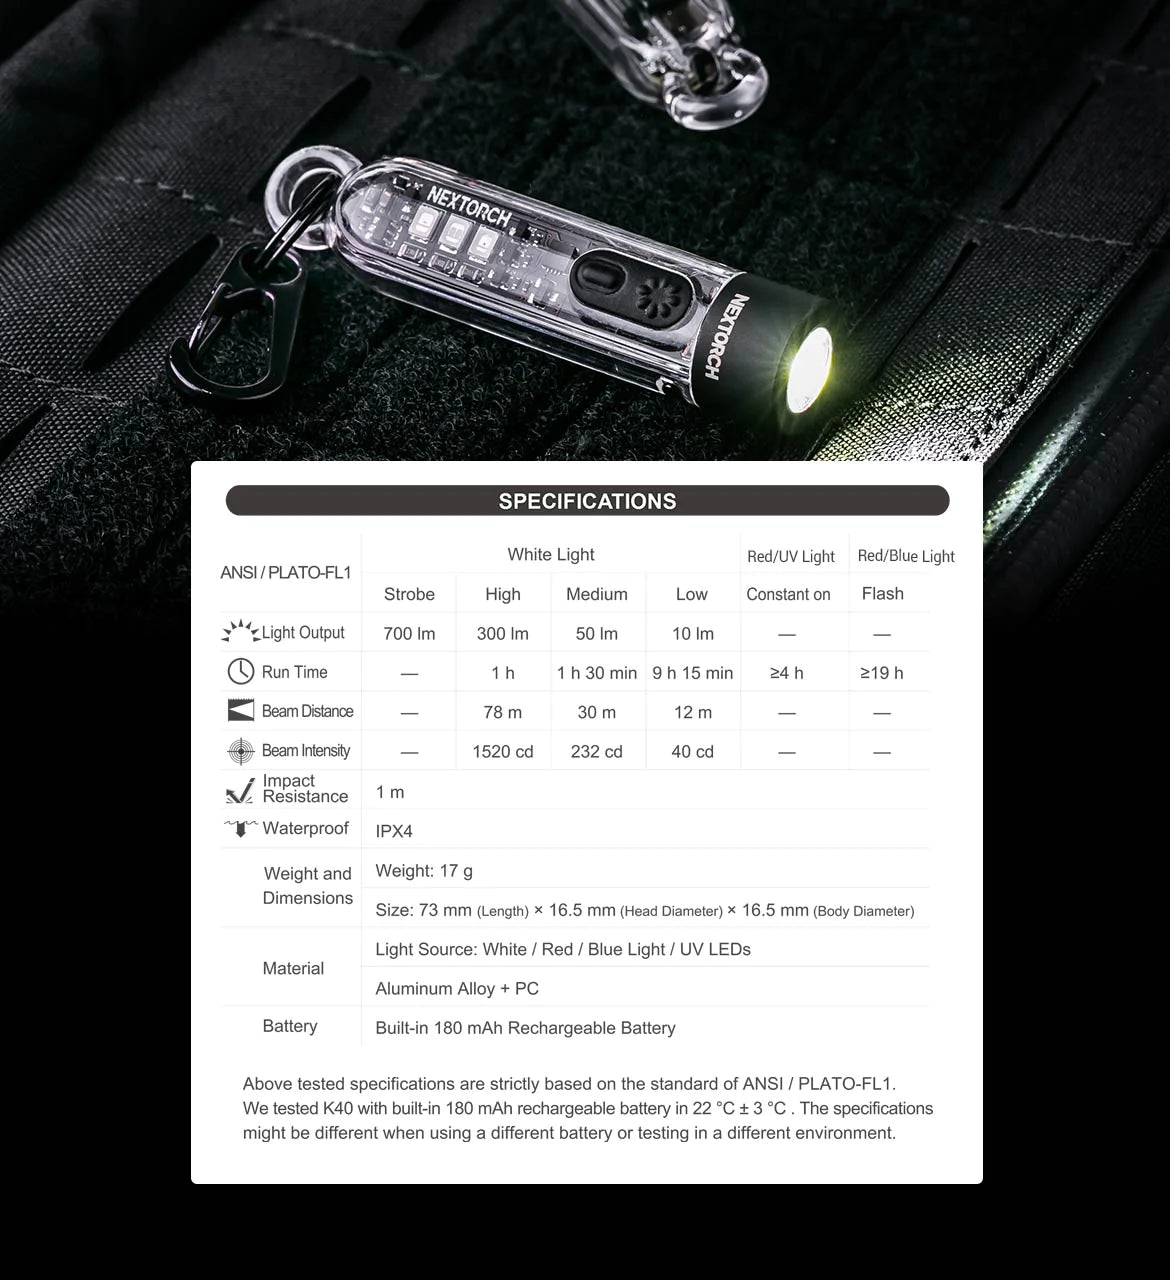 (4-In-1) Nextorch K40 Multi Light Sources Keychain Light